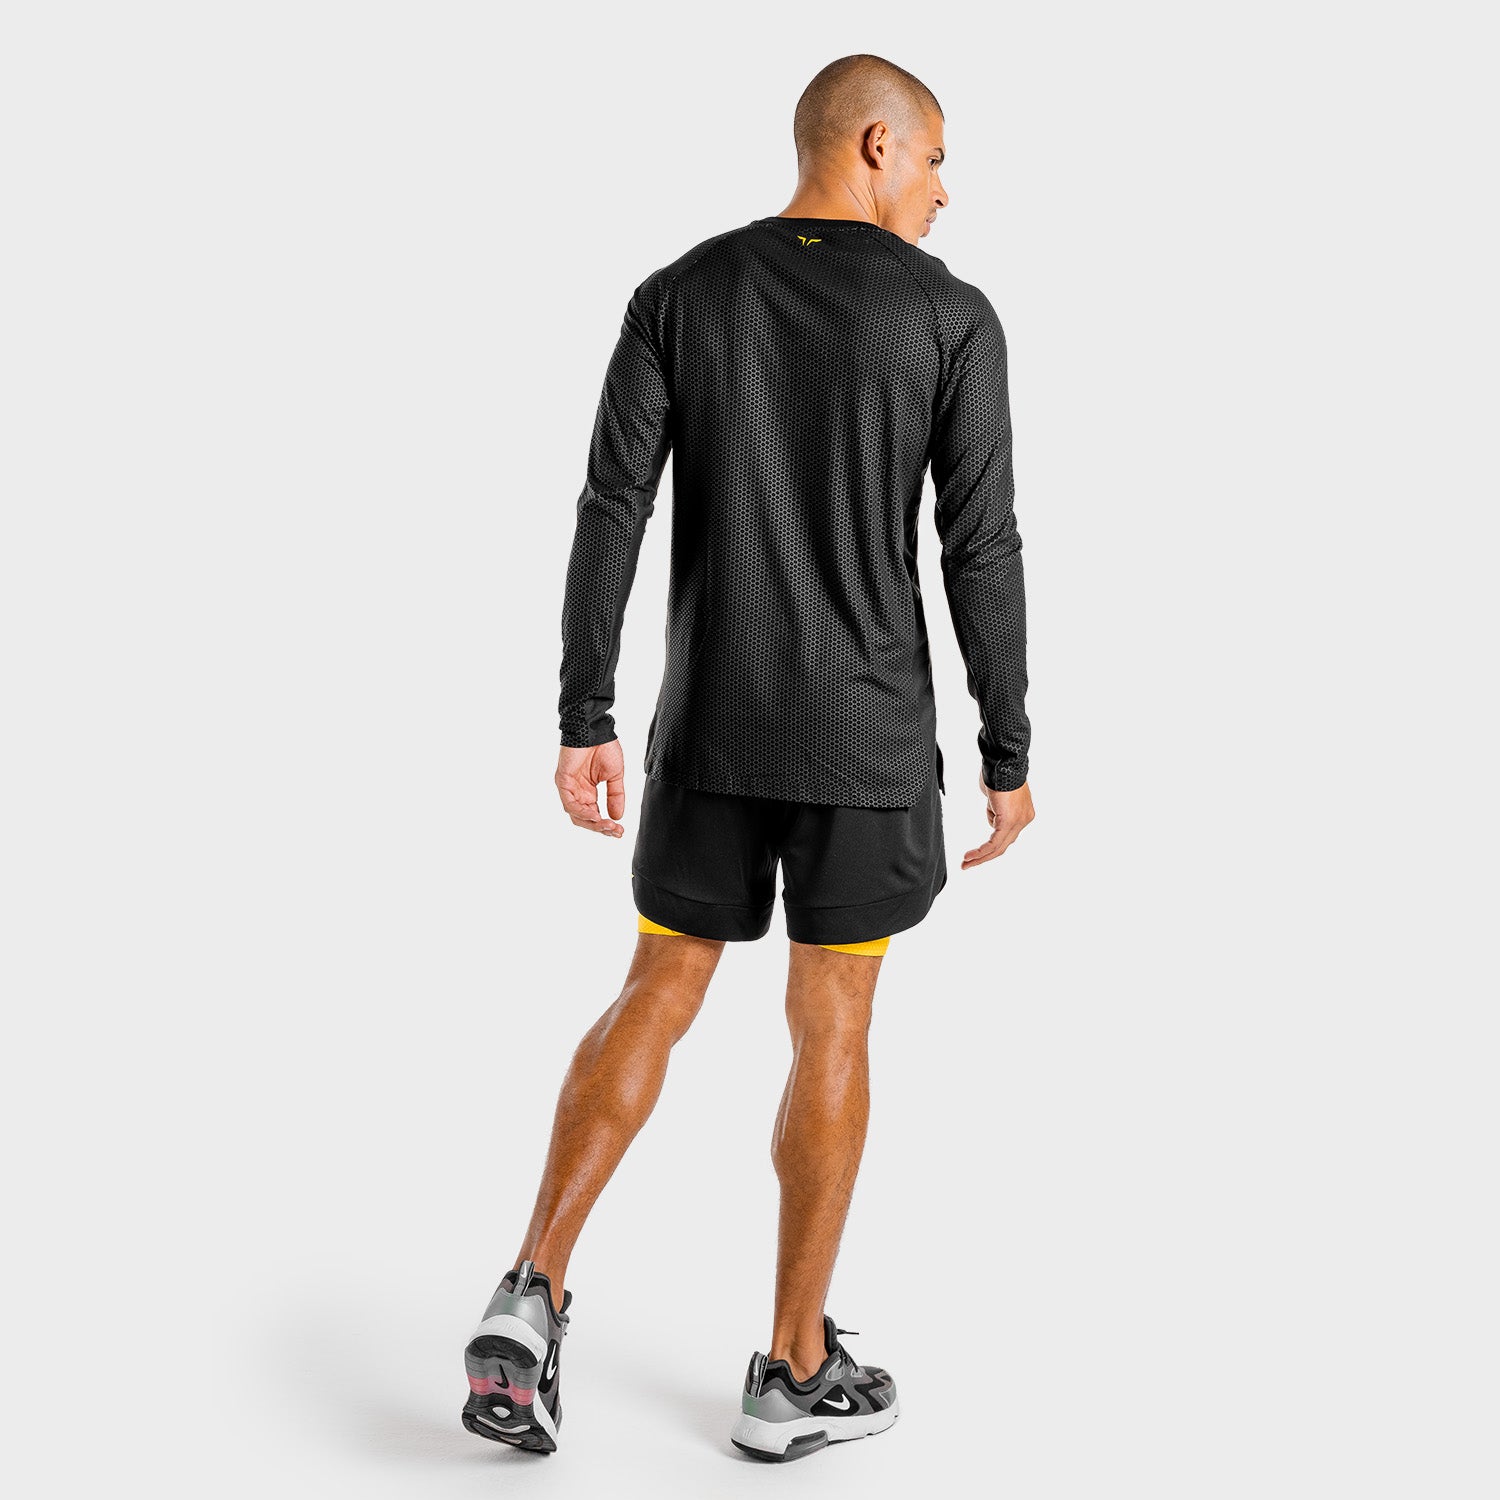 squatwolf-workout-shirts-for-men-batman-gym-long-sleeves-tee-black-gym-wear